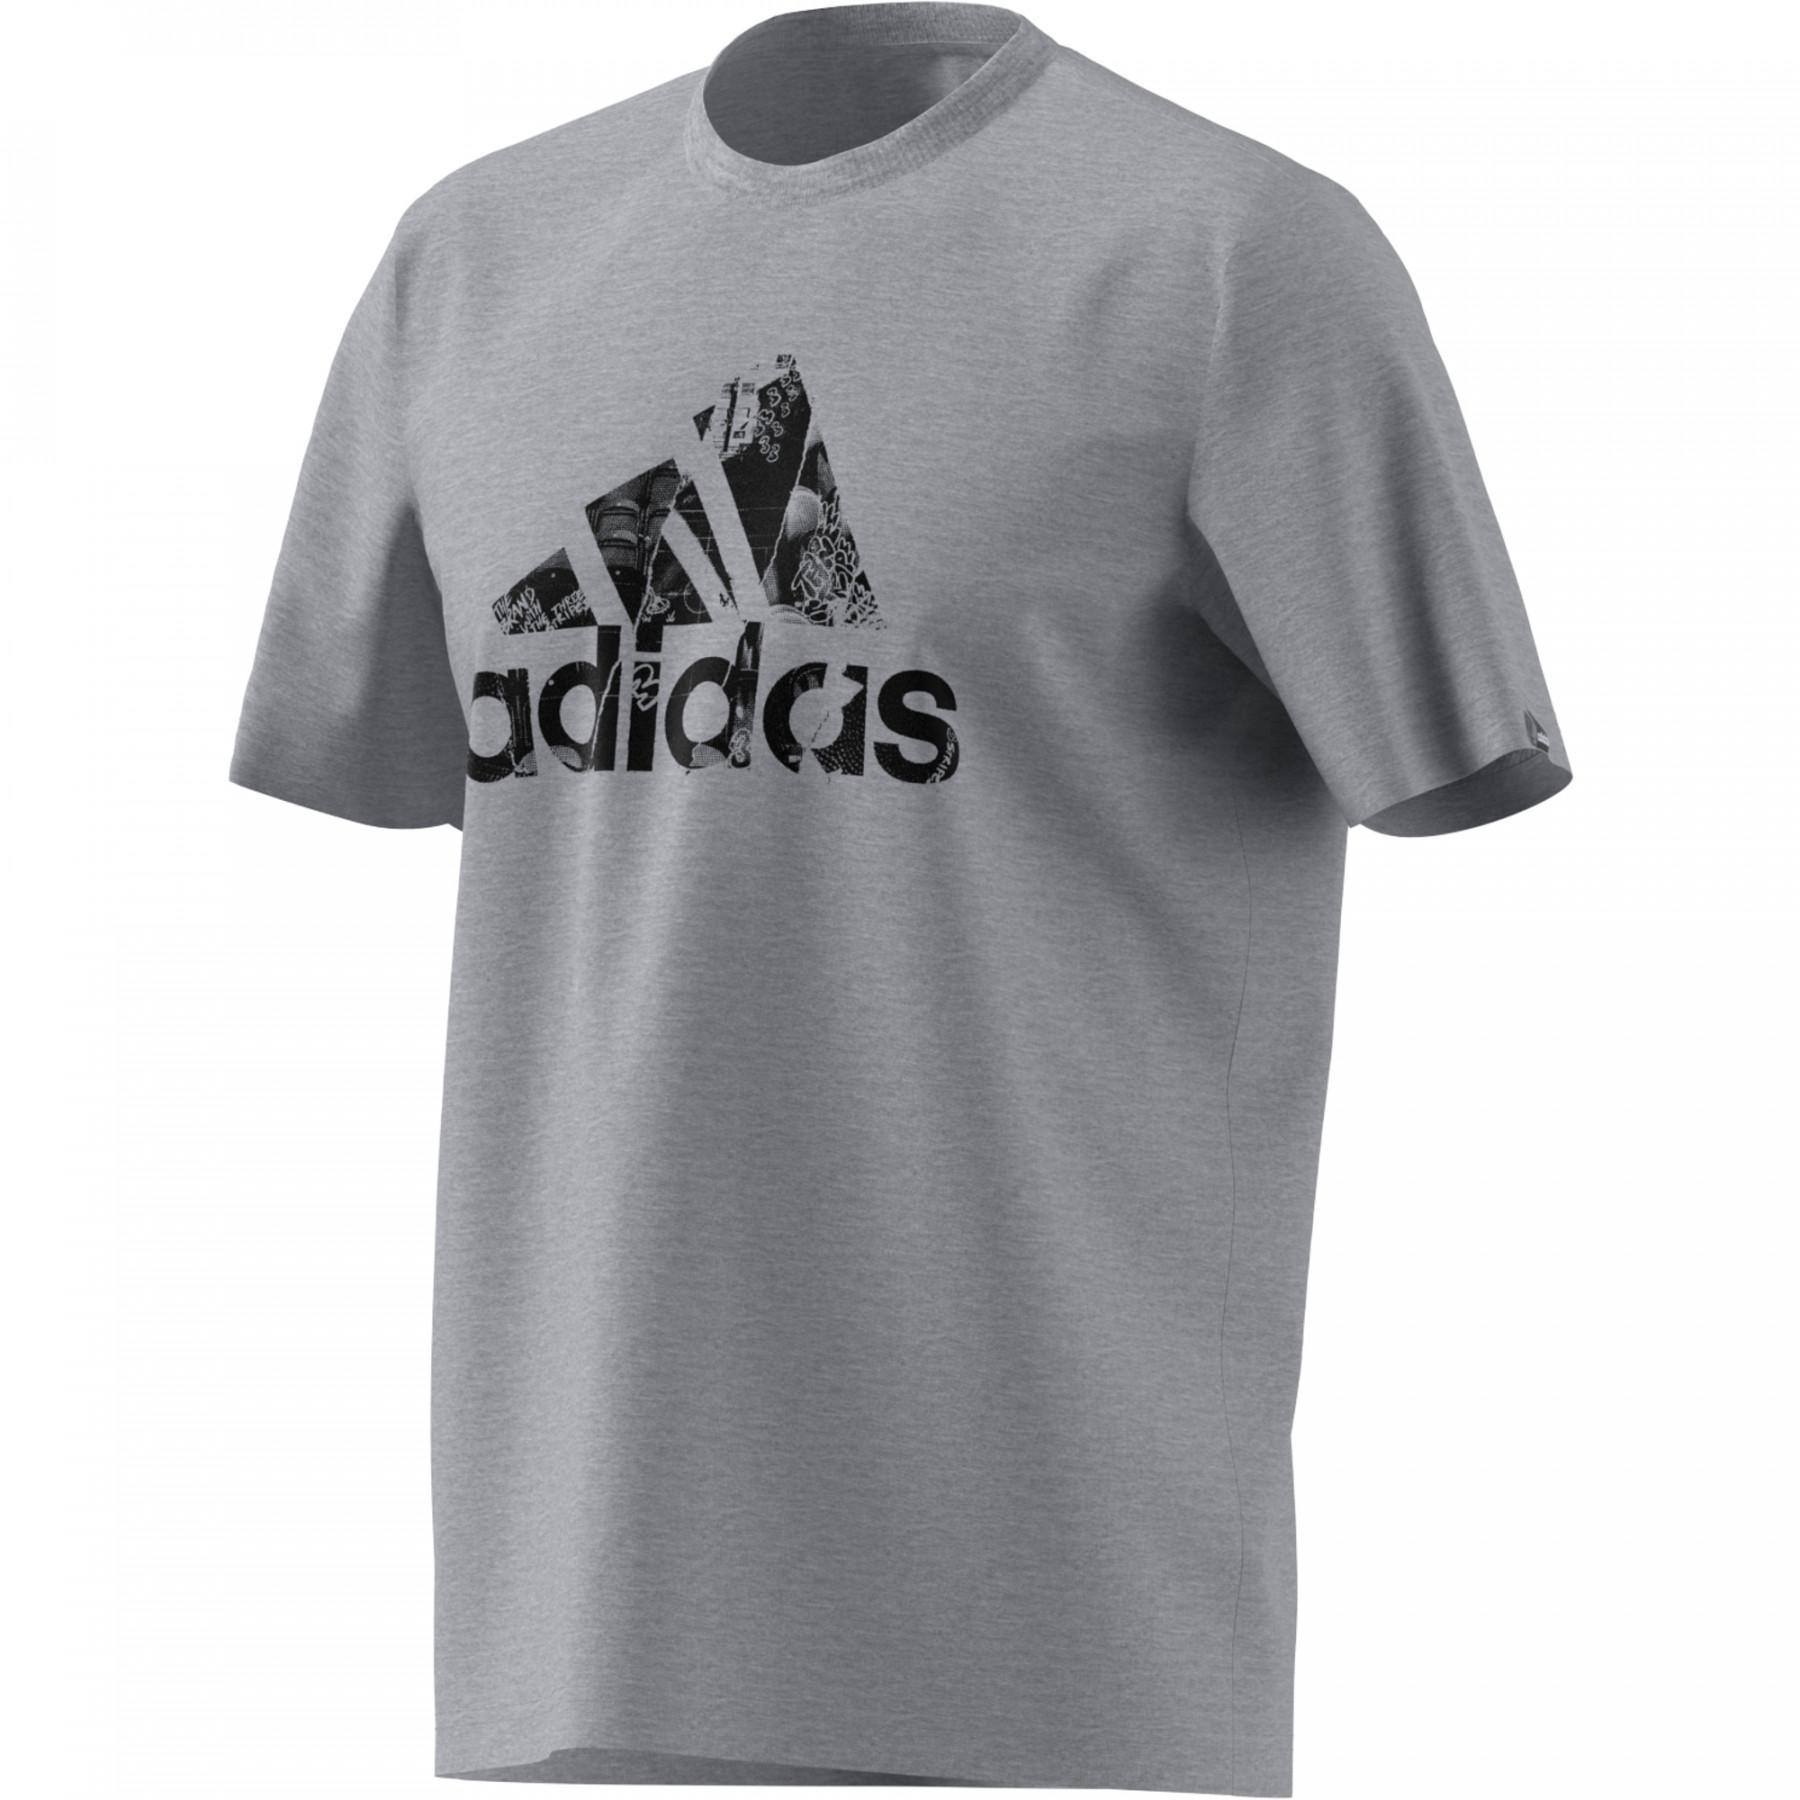 Koszulka adidas Photo Logo